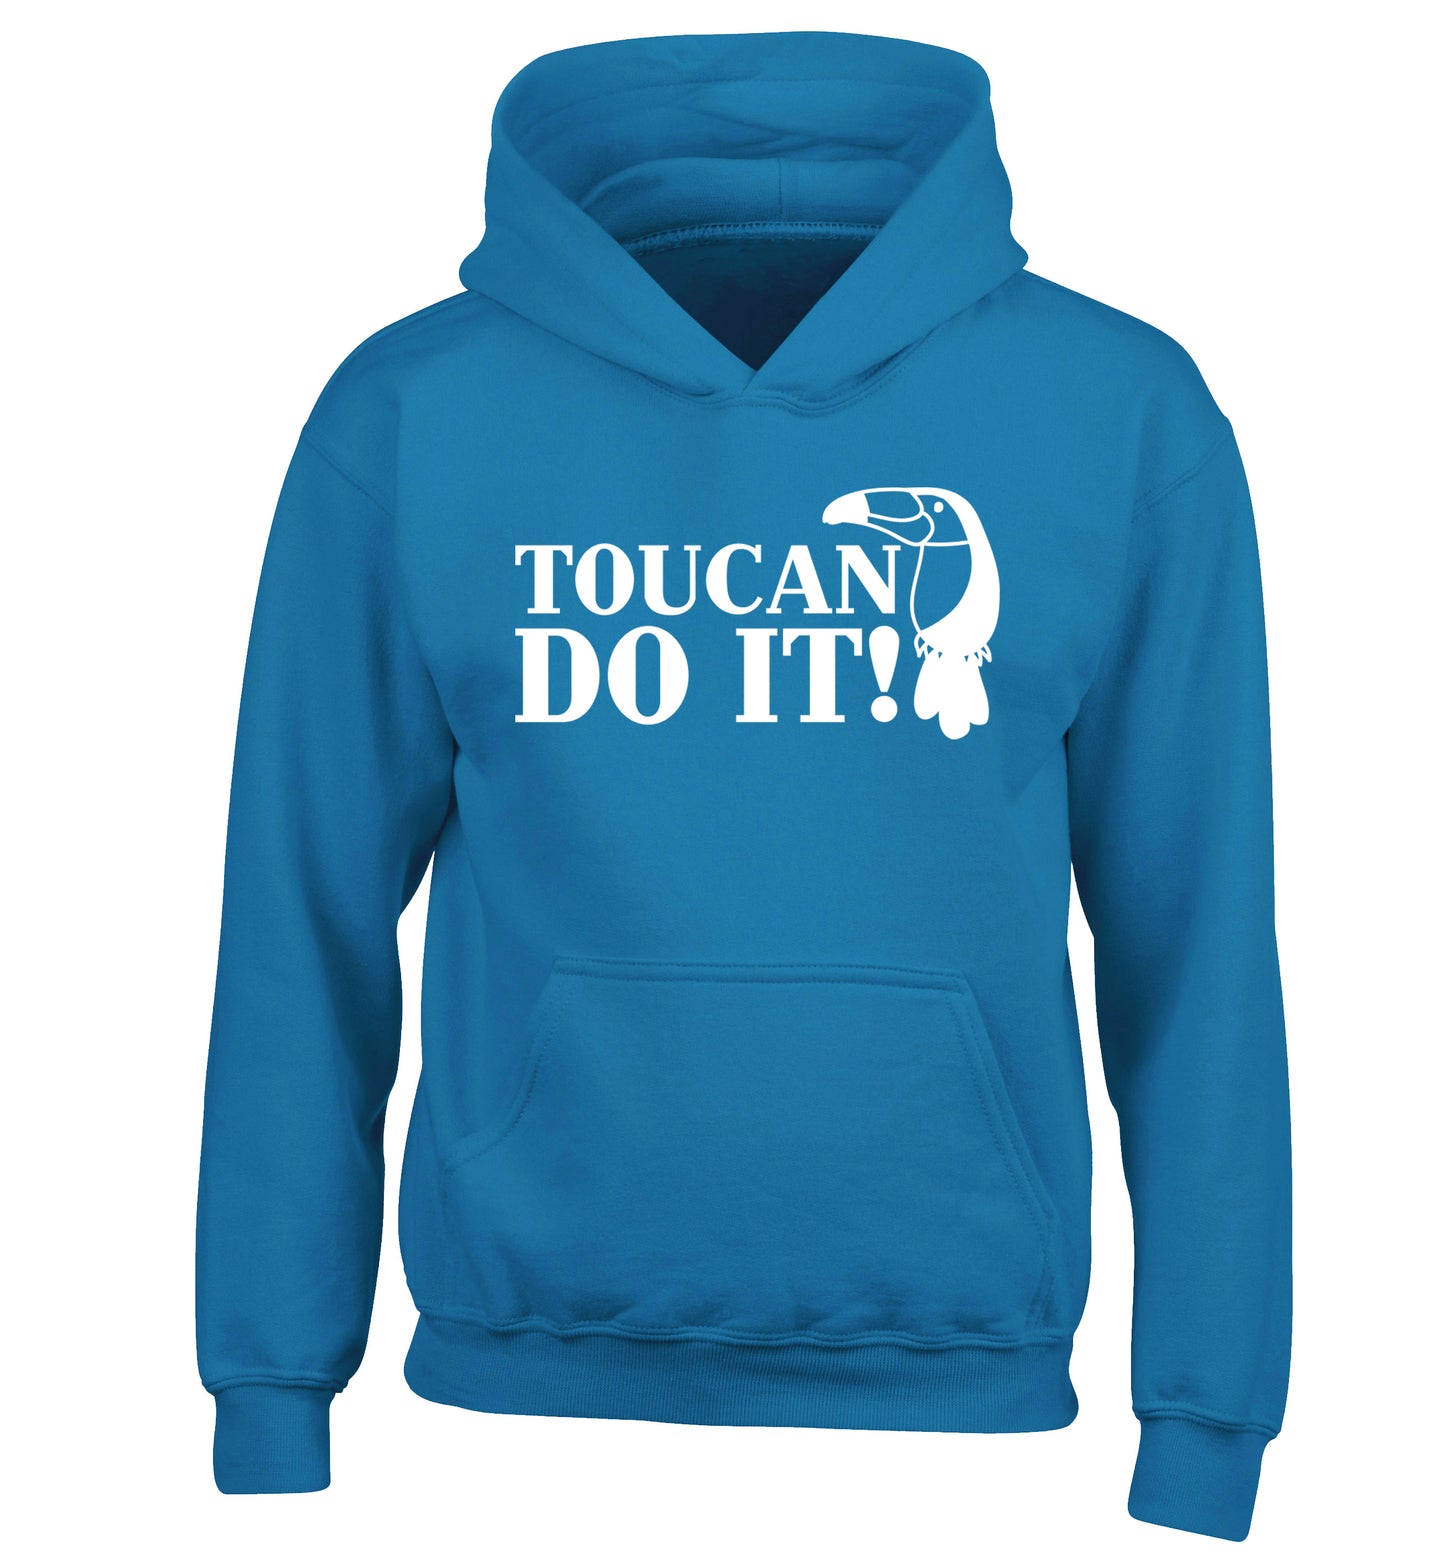 Toucan do it! children's blue hoodie 12-13 Years